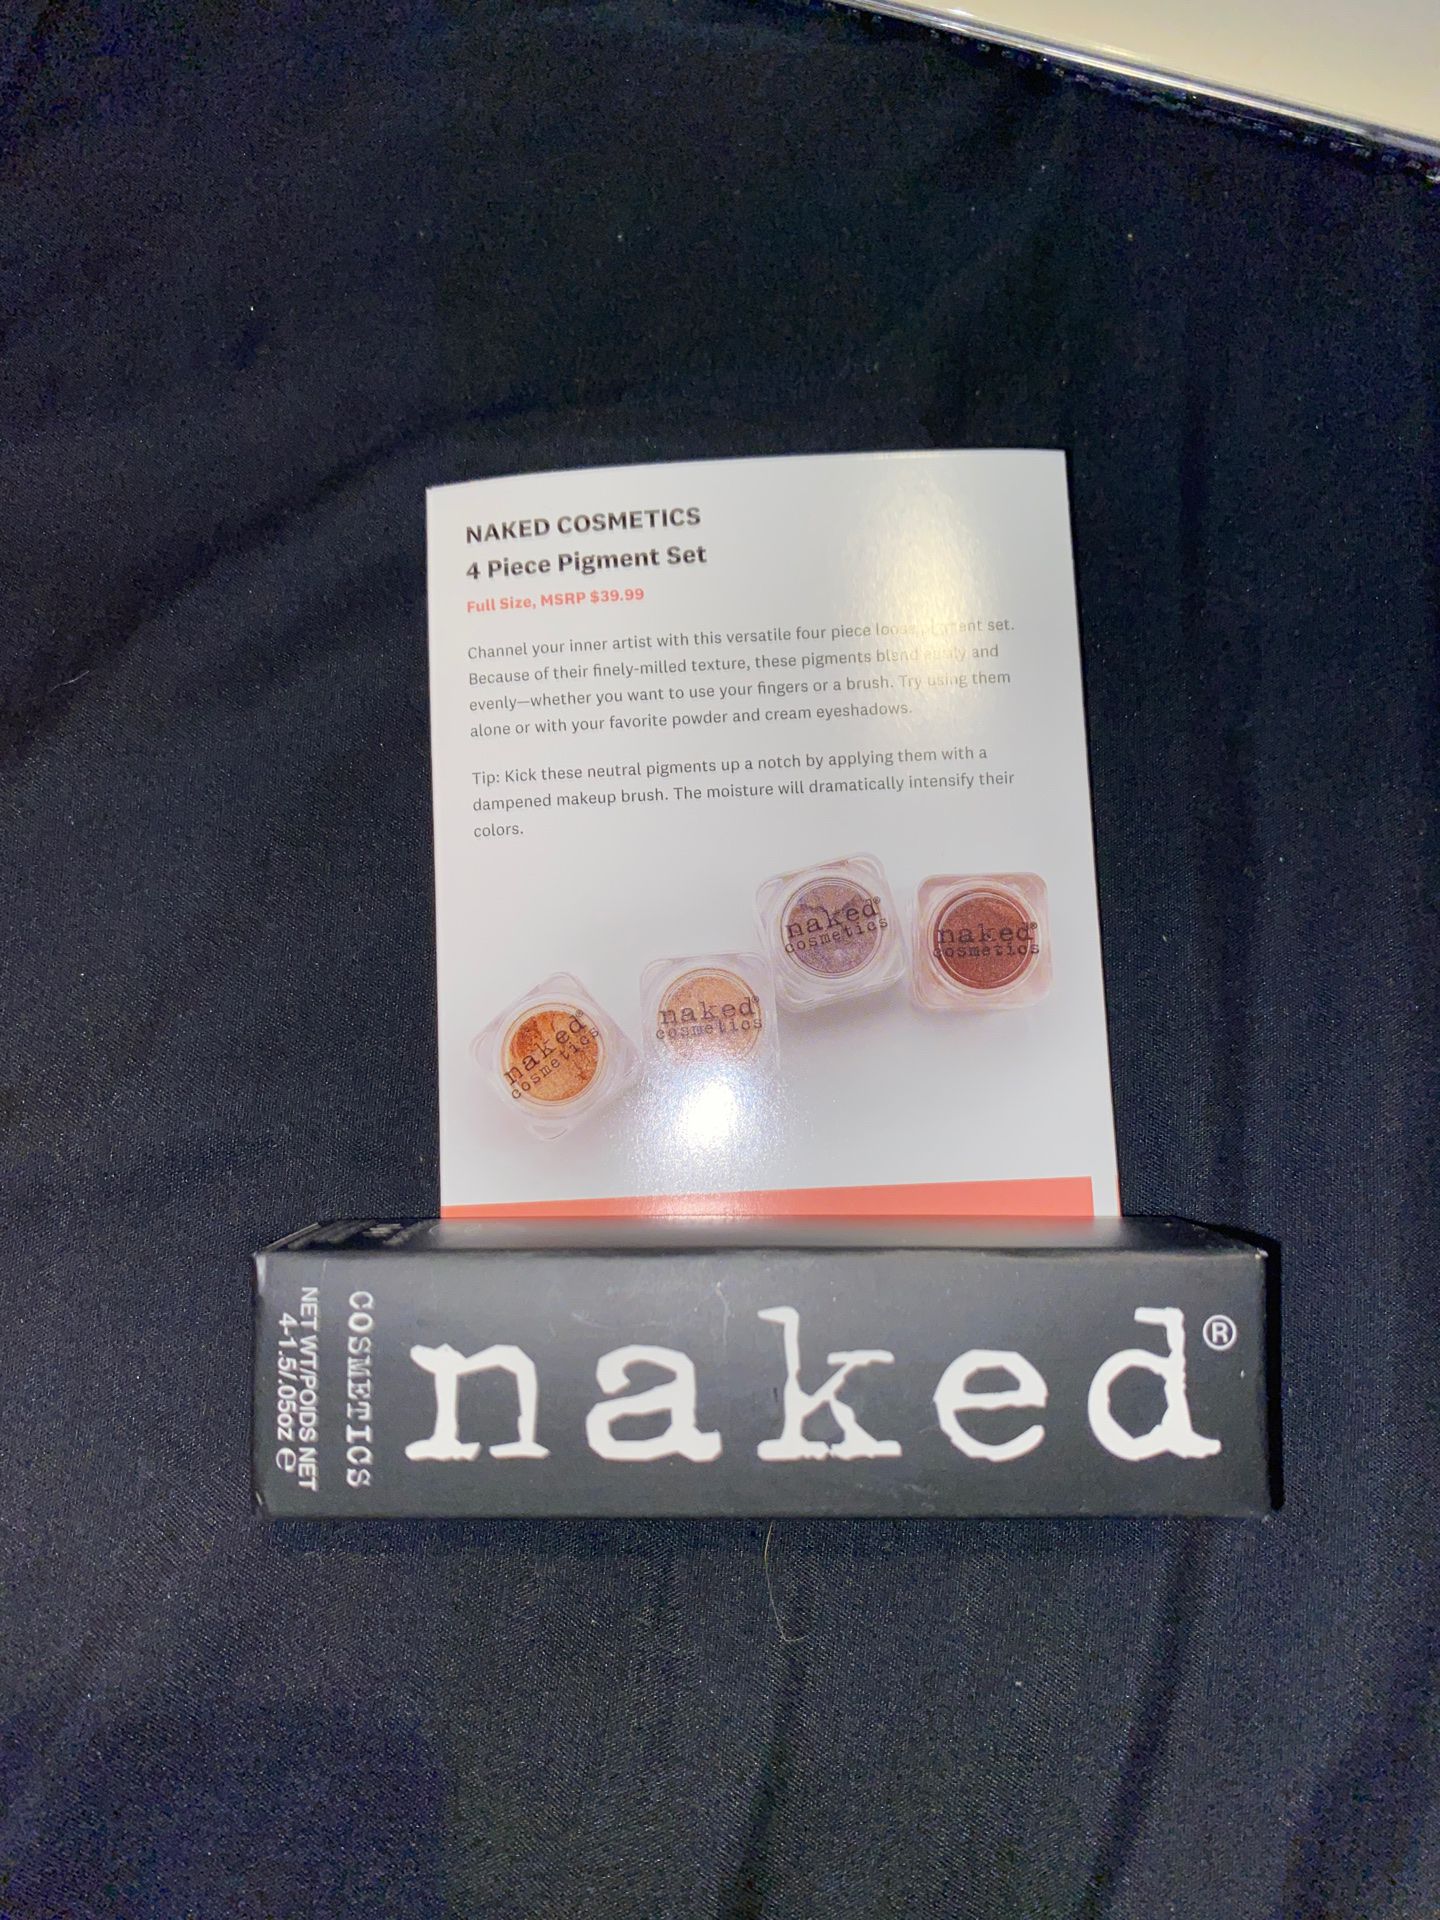 Naked cosmetics - 4 piece pigment set